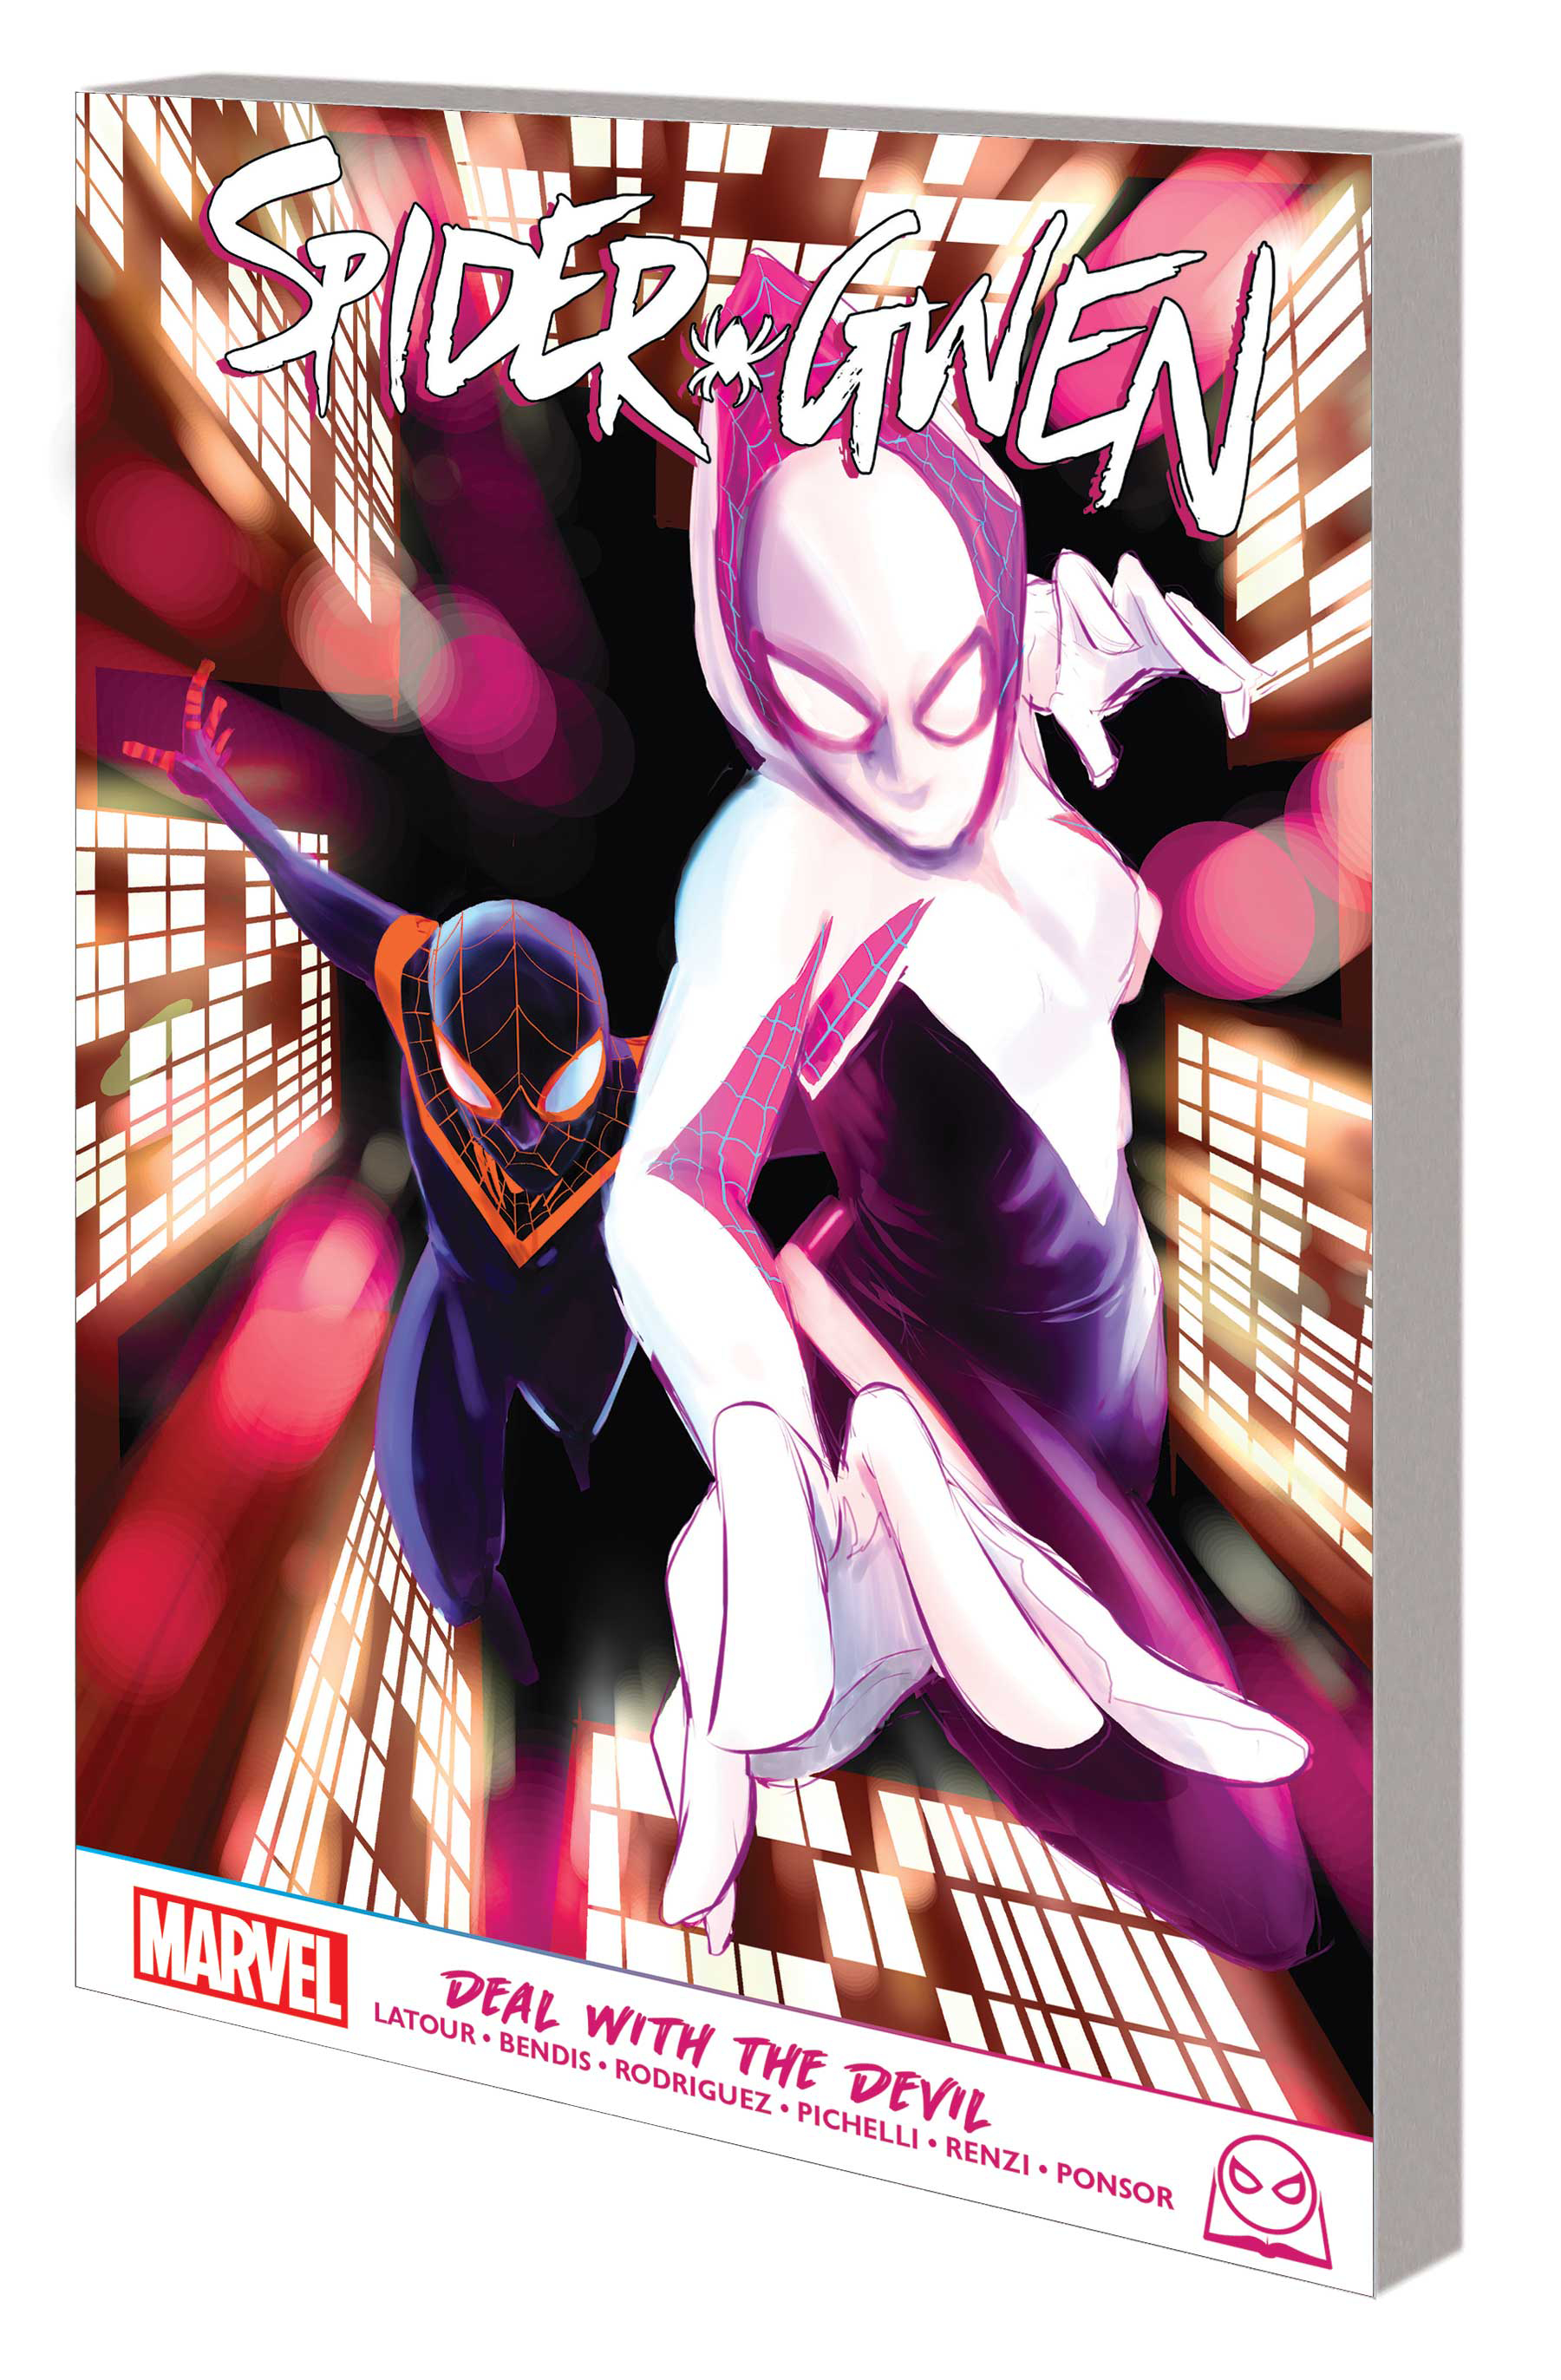 Spider-Gwen Deal With Devil Graphic Novel